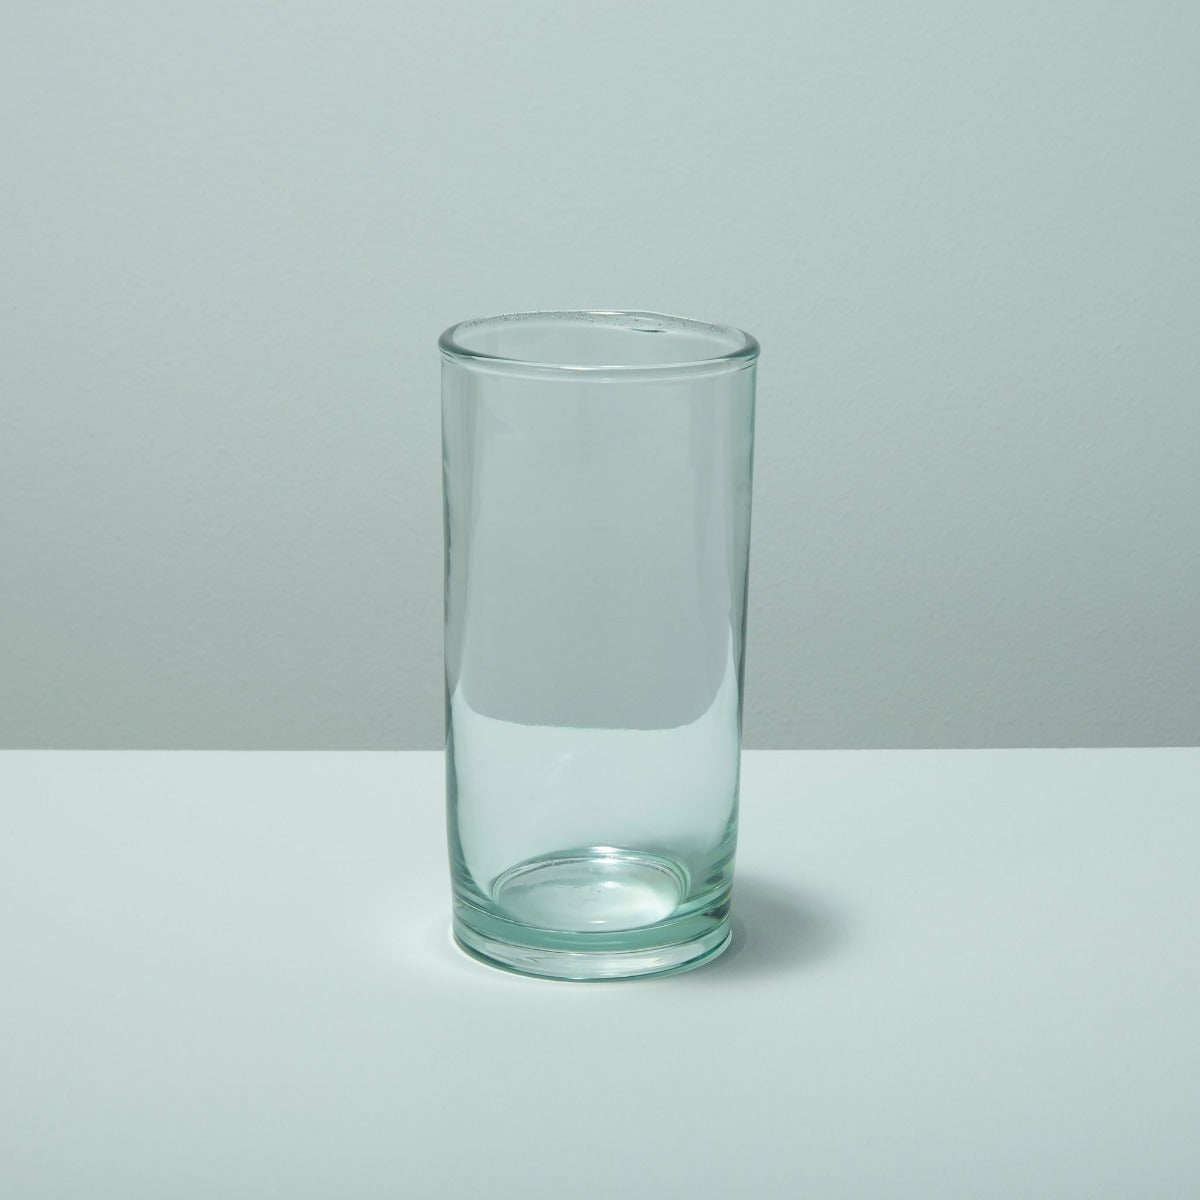 Premium Recycled Highball Glass, Set of 4